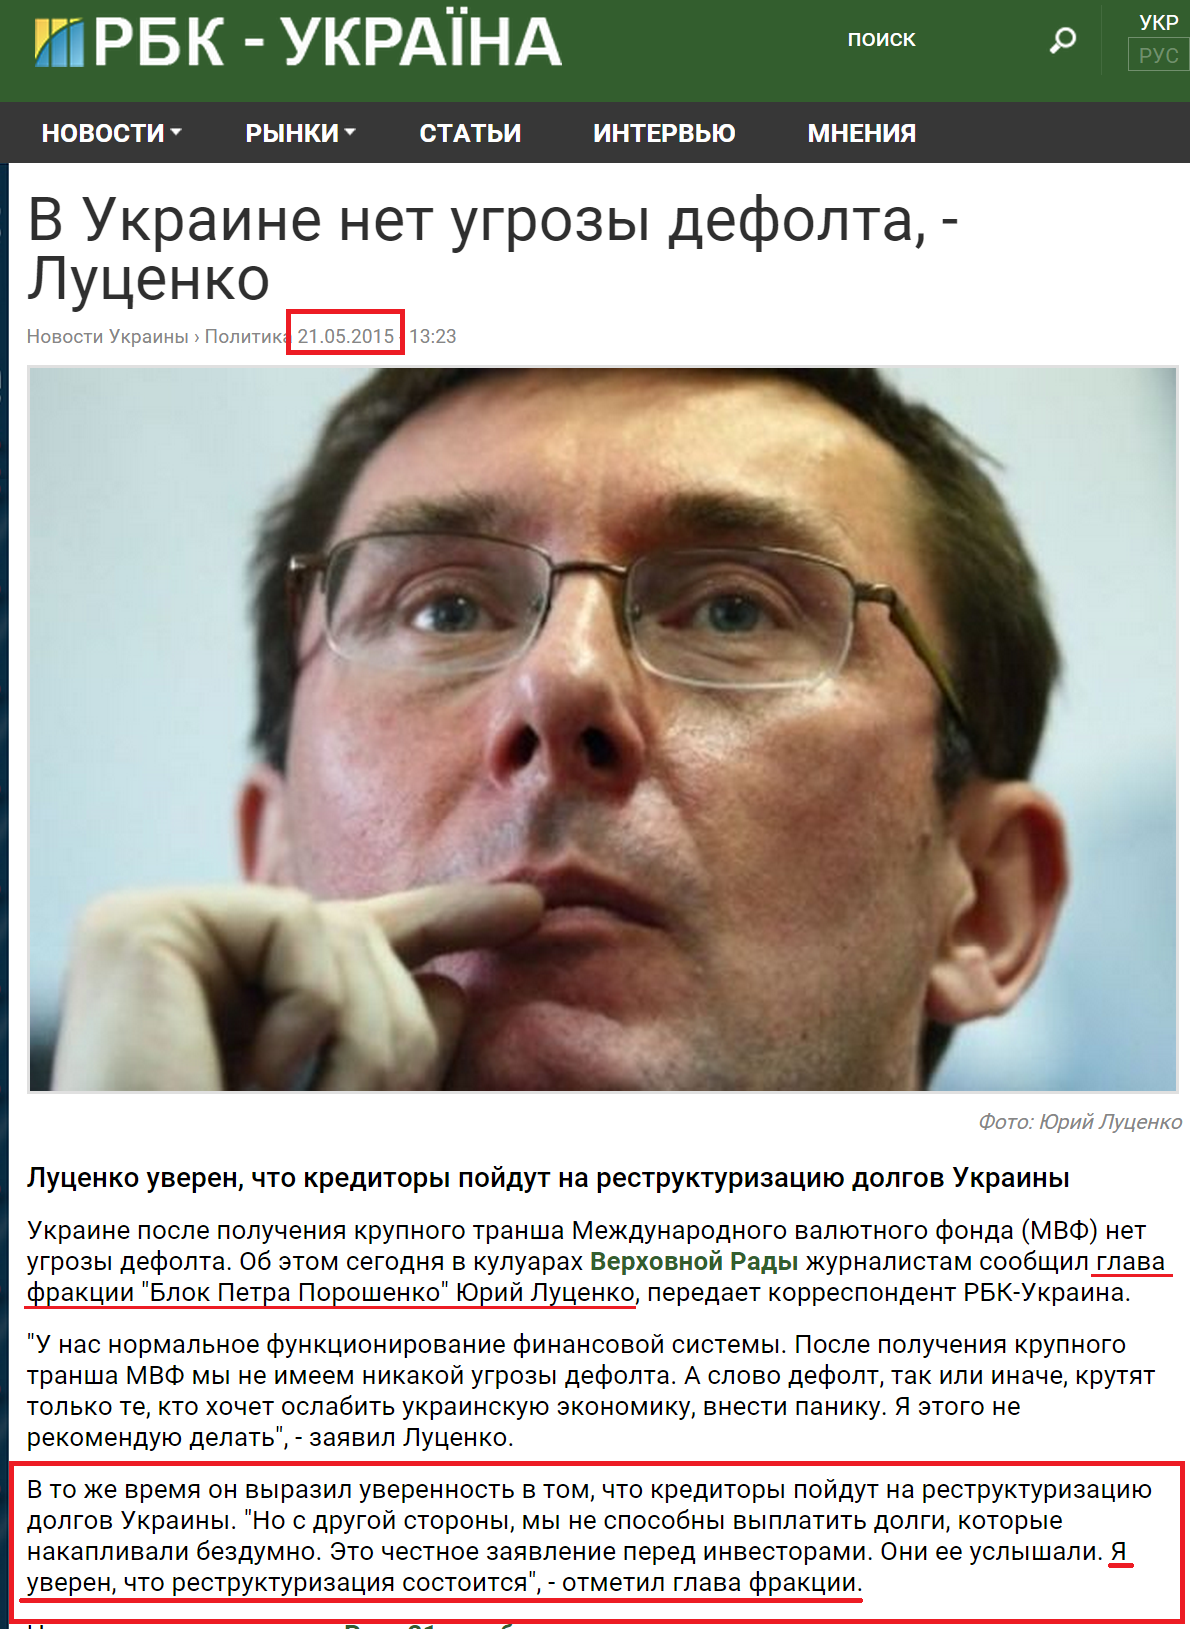 http://www.rbc.ua/rus/news/ukraine-ugrozy-defolta-lutsenko-1432203800.html